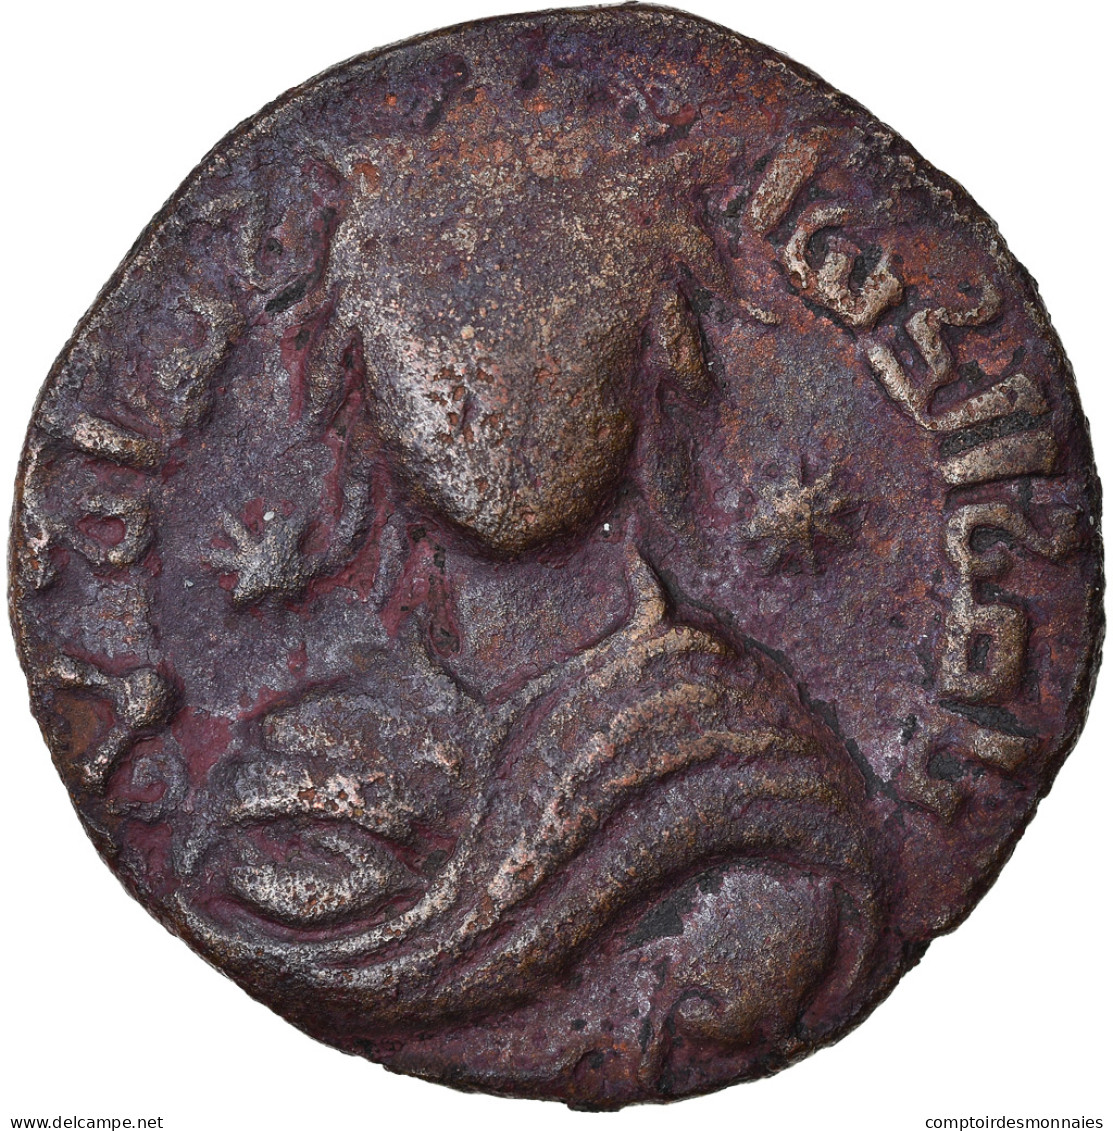 Monnaie, Artuqids, Nasir Al-Din, Dirham, AH 599 (1202/3), Mardin, TB, Bronze - Islamic